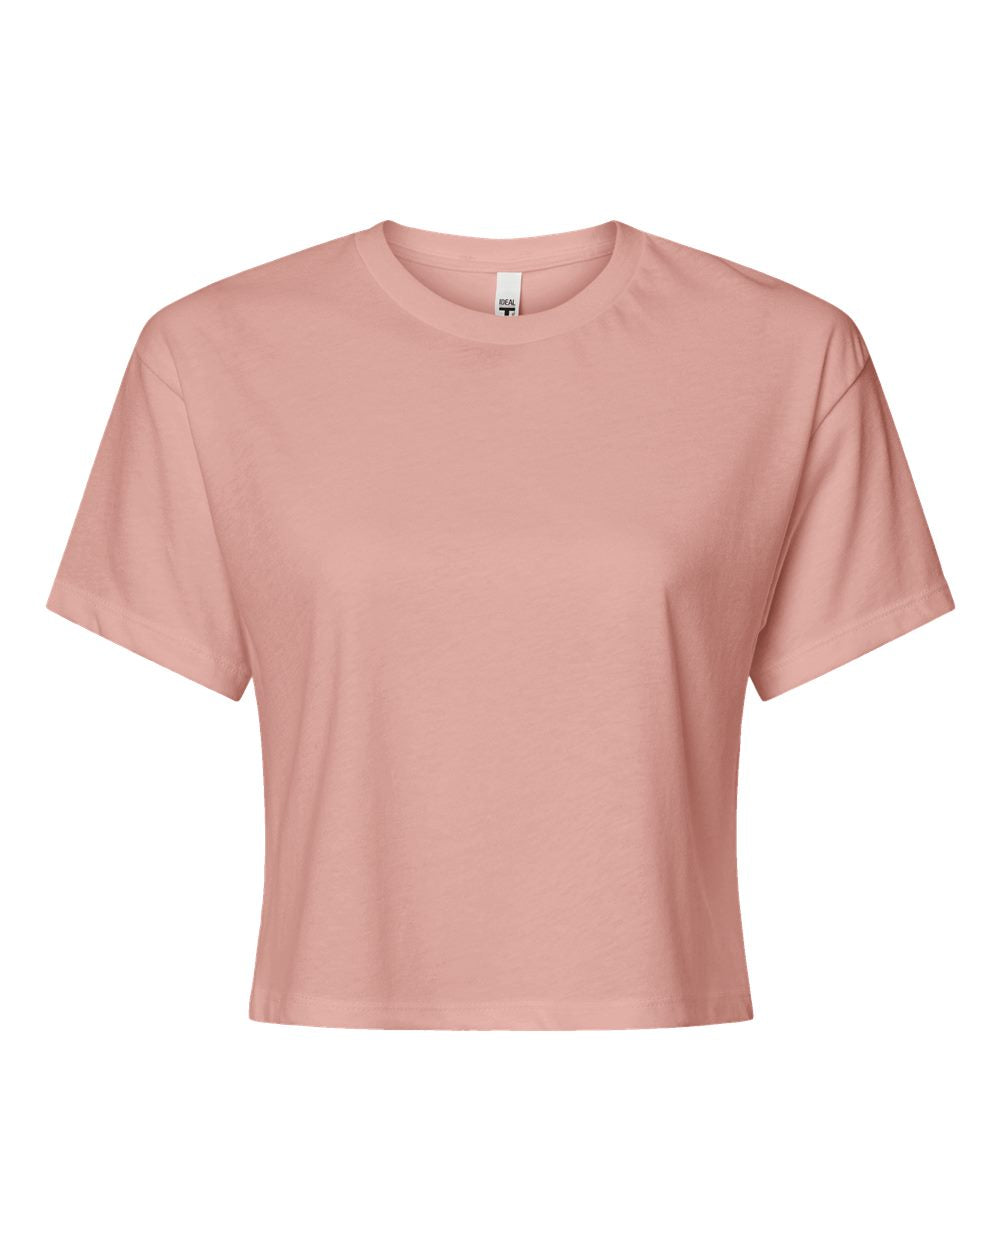 Next Level - Women's Ideal Crop Top - 1580 – Shirts23 - Premium